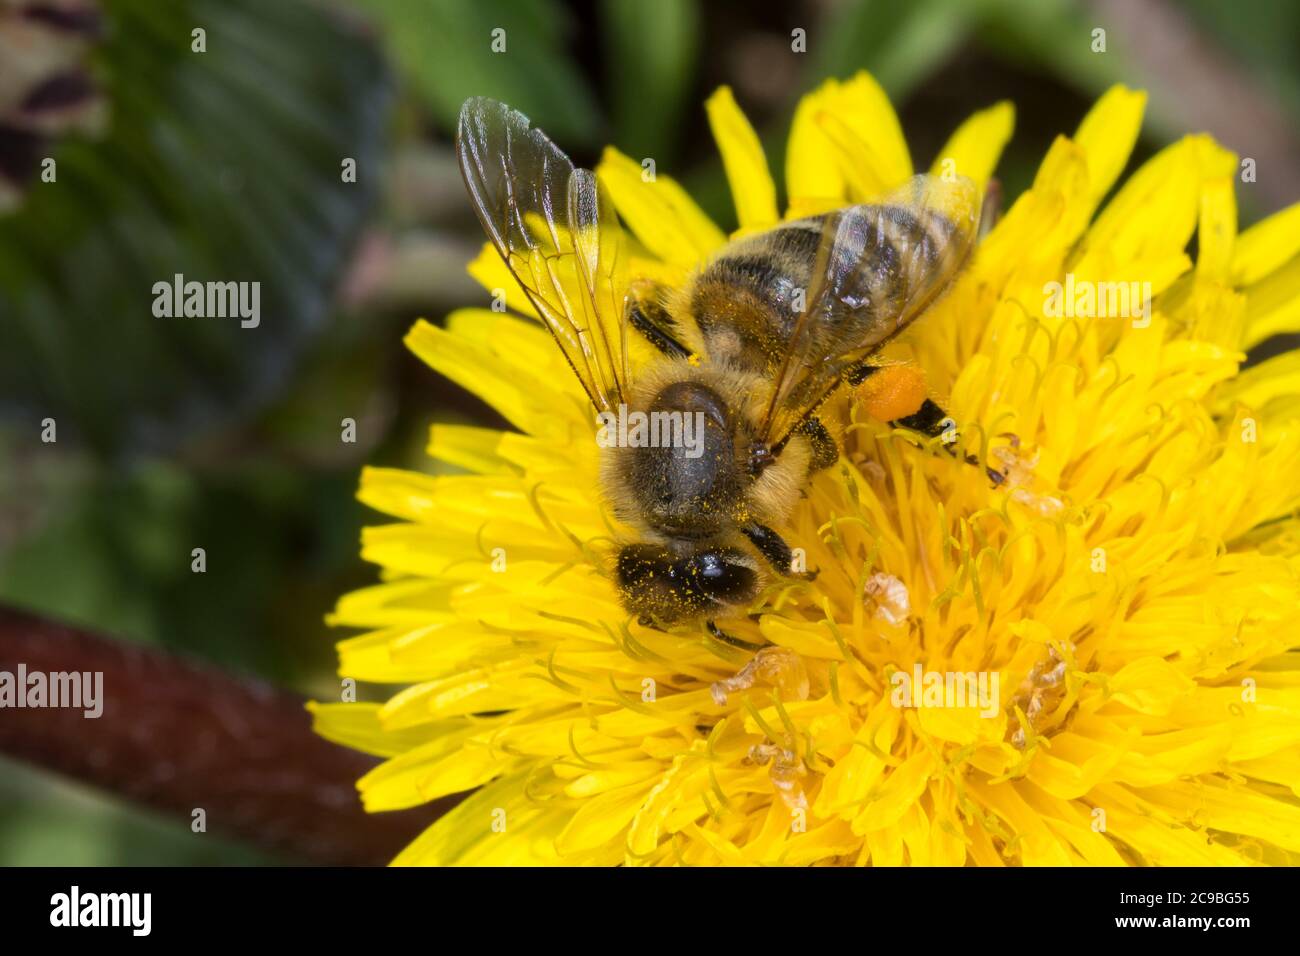 Honigbiene, Honig-Biene, Europäische Honigbiene, Westliche Honigbiene, Pollenhöschen, Pollen, Biene, Bienen, Apis mellifera, Apis mellifica, Blütenbes Stock Photo